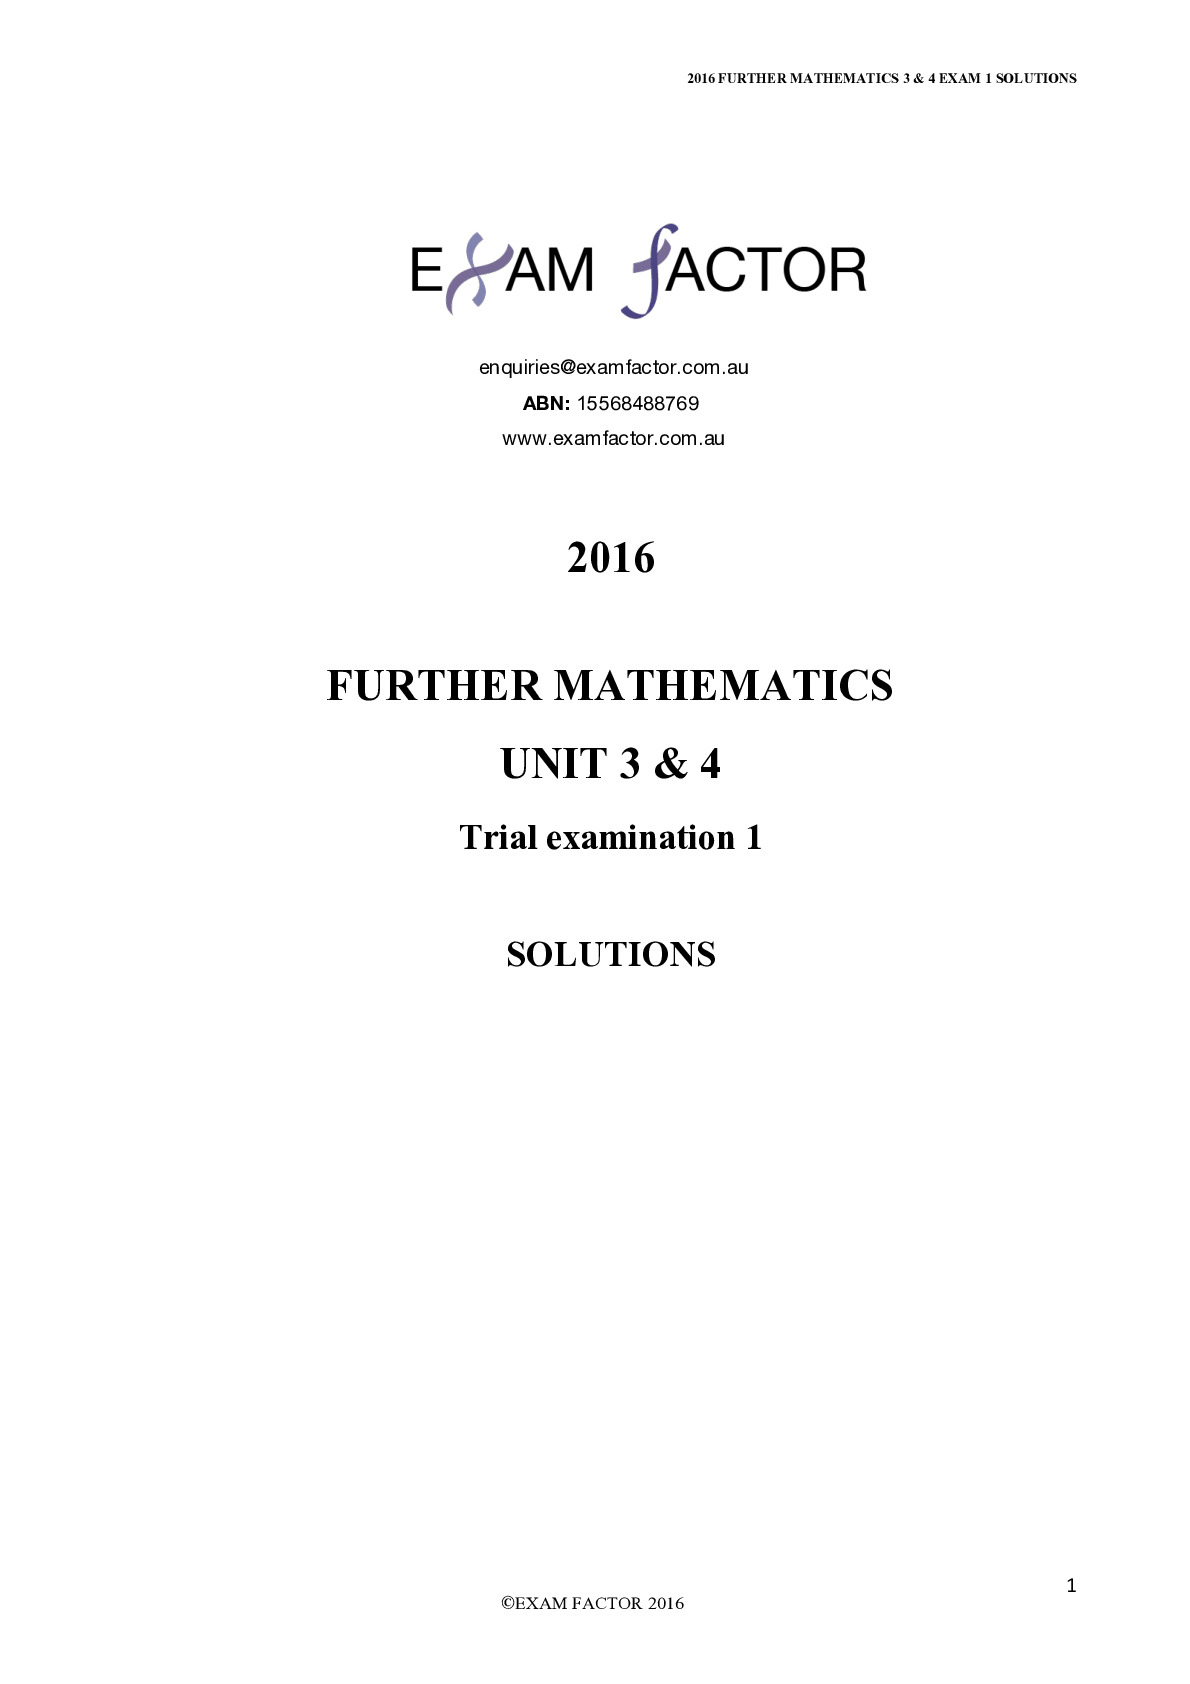 Further_2016_Exam_Factor_Exam_1_Solutions.pdf